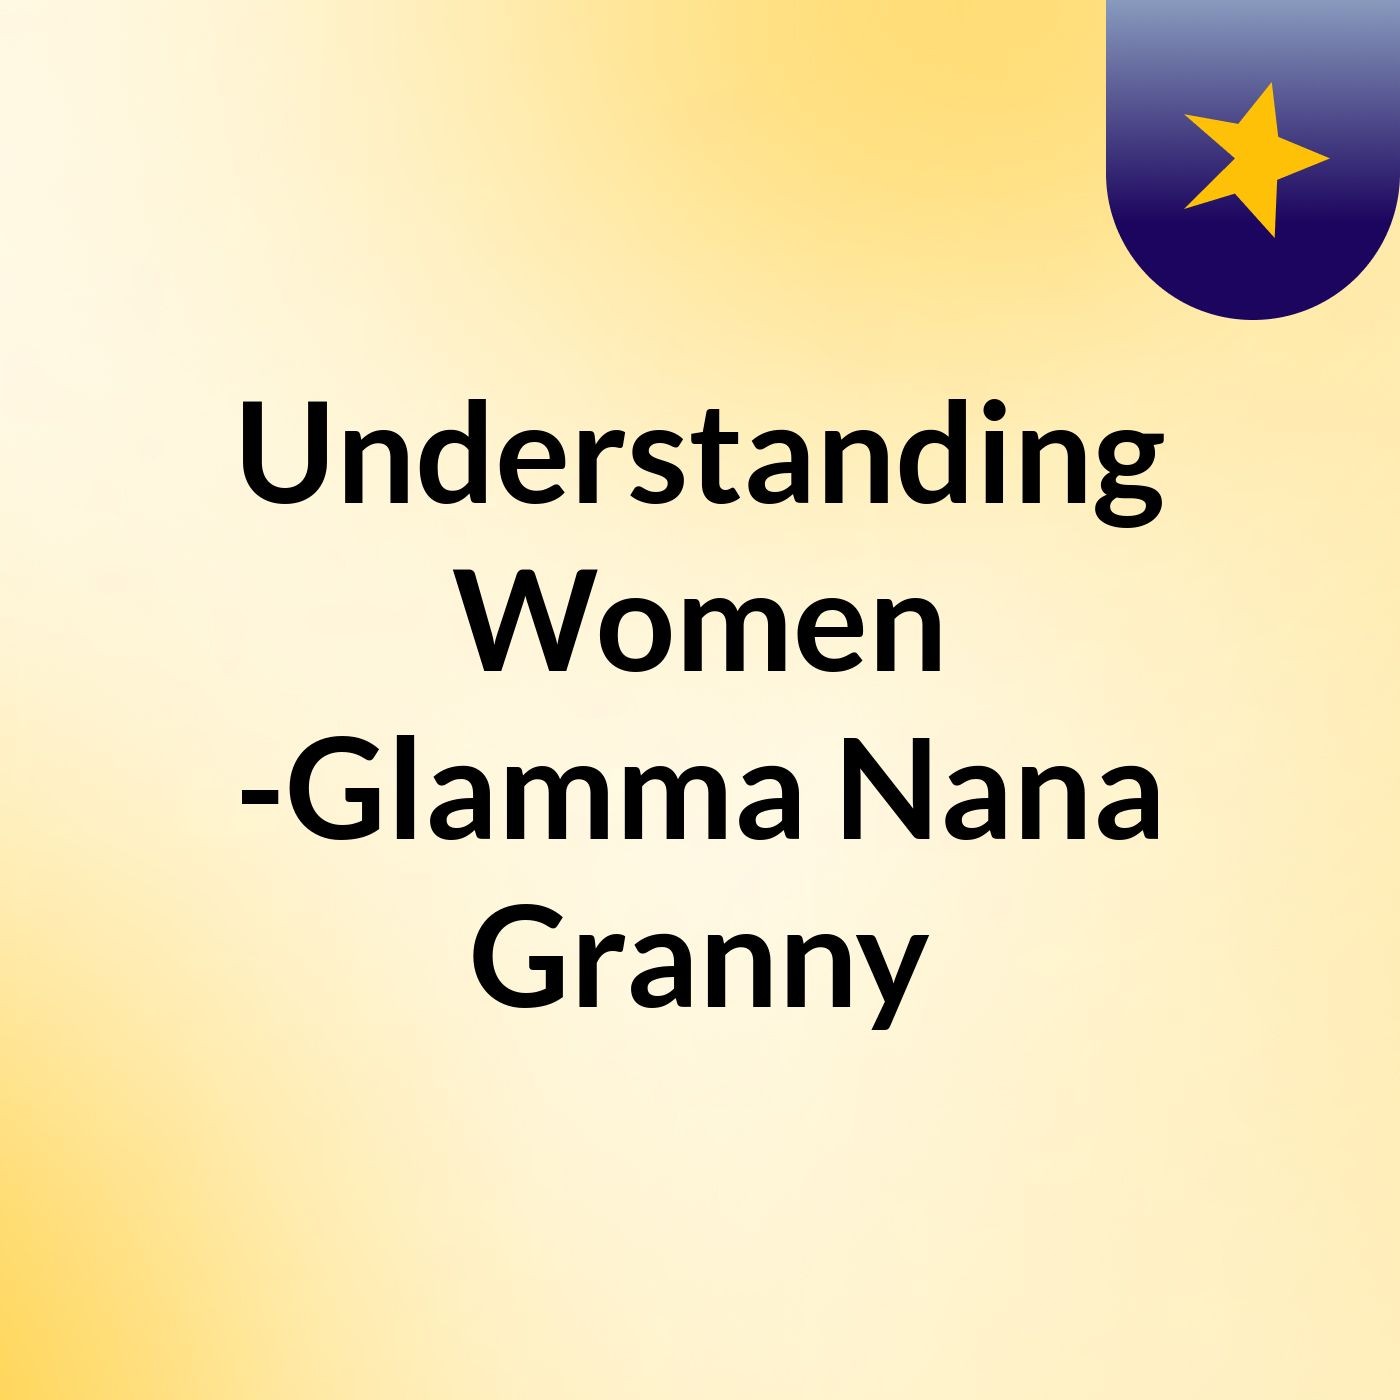 Understanding Women -Glamma, Nana Granny